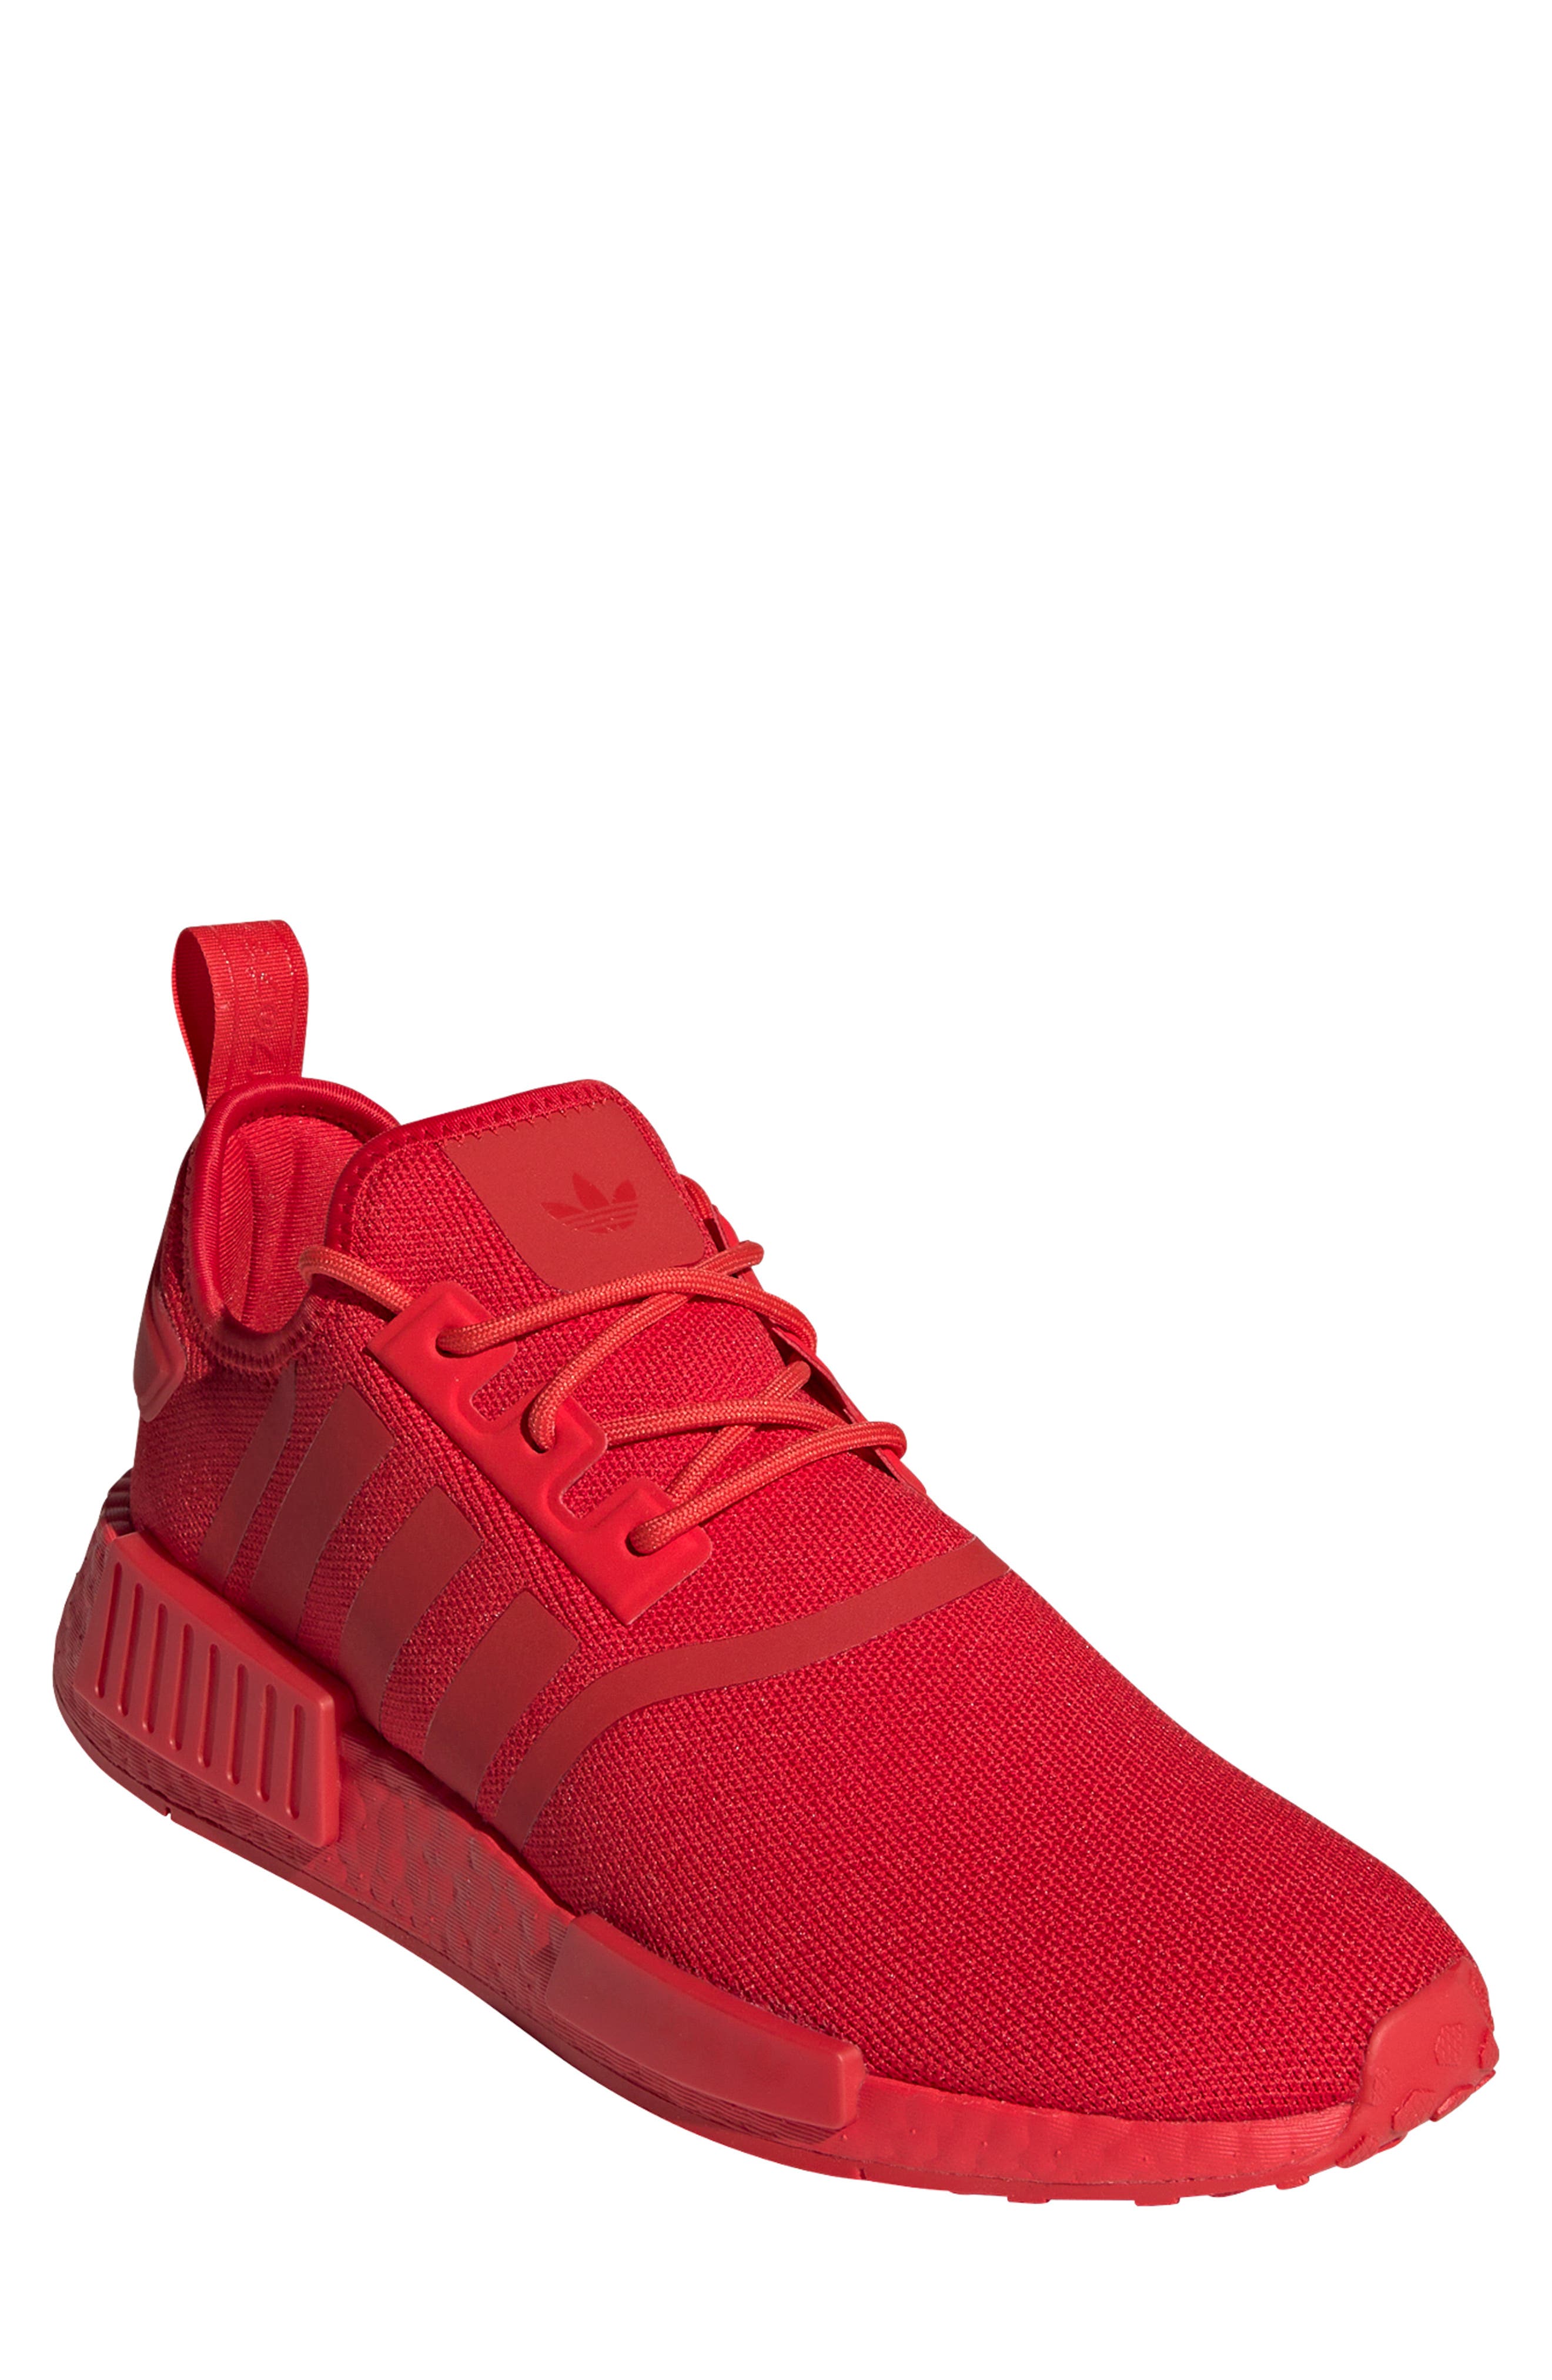 Men's Red Shoes | Nordstrom